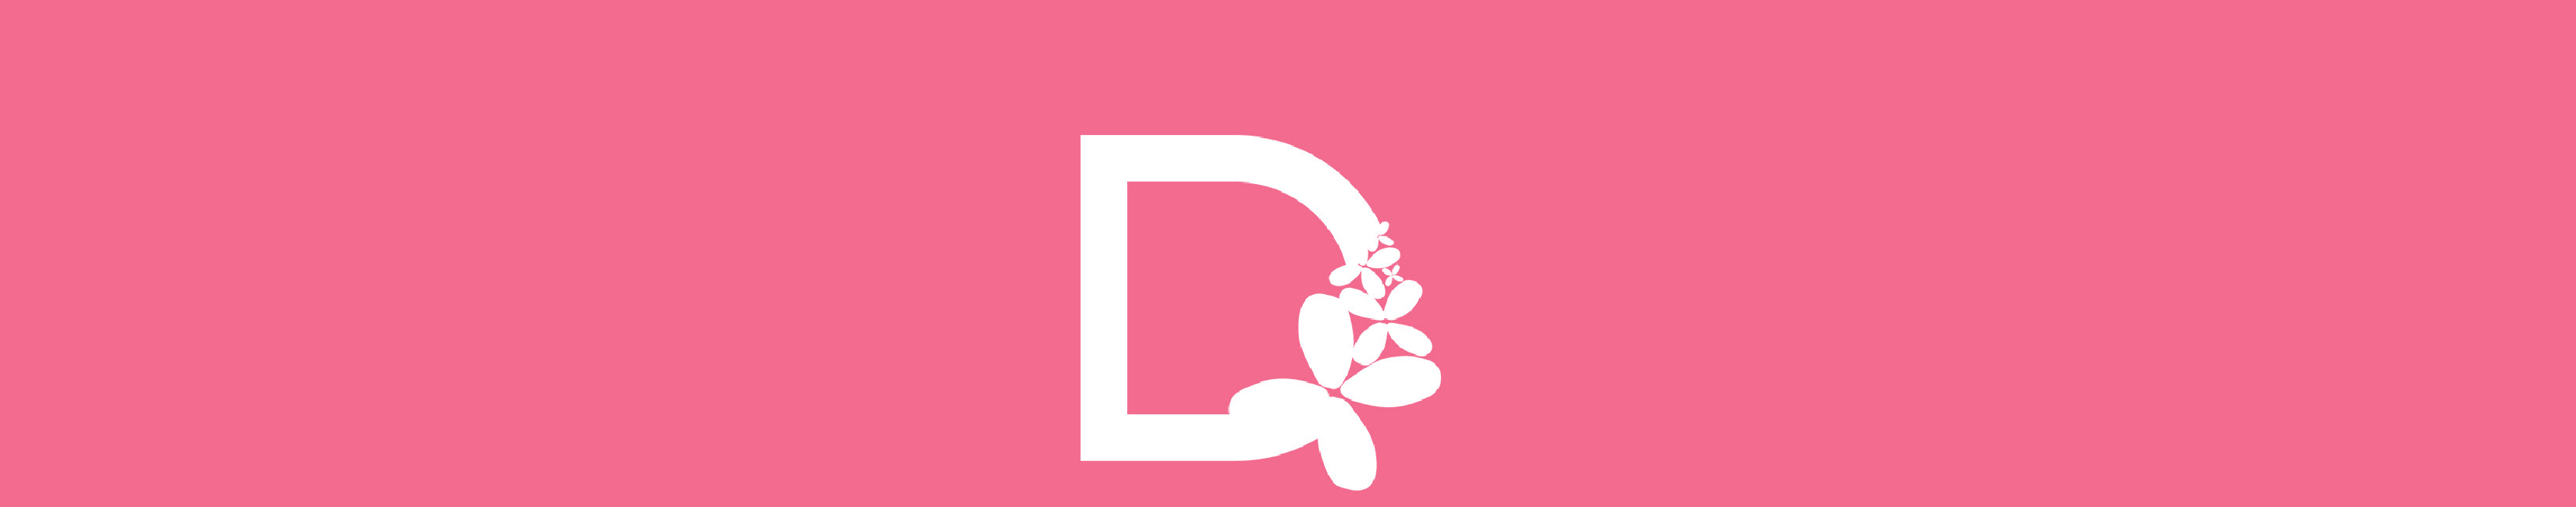 Dianna Lopez's profile banner